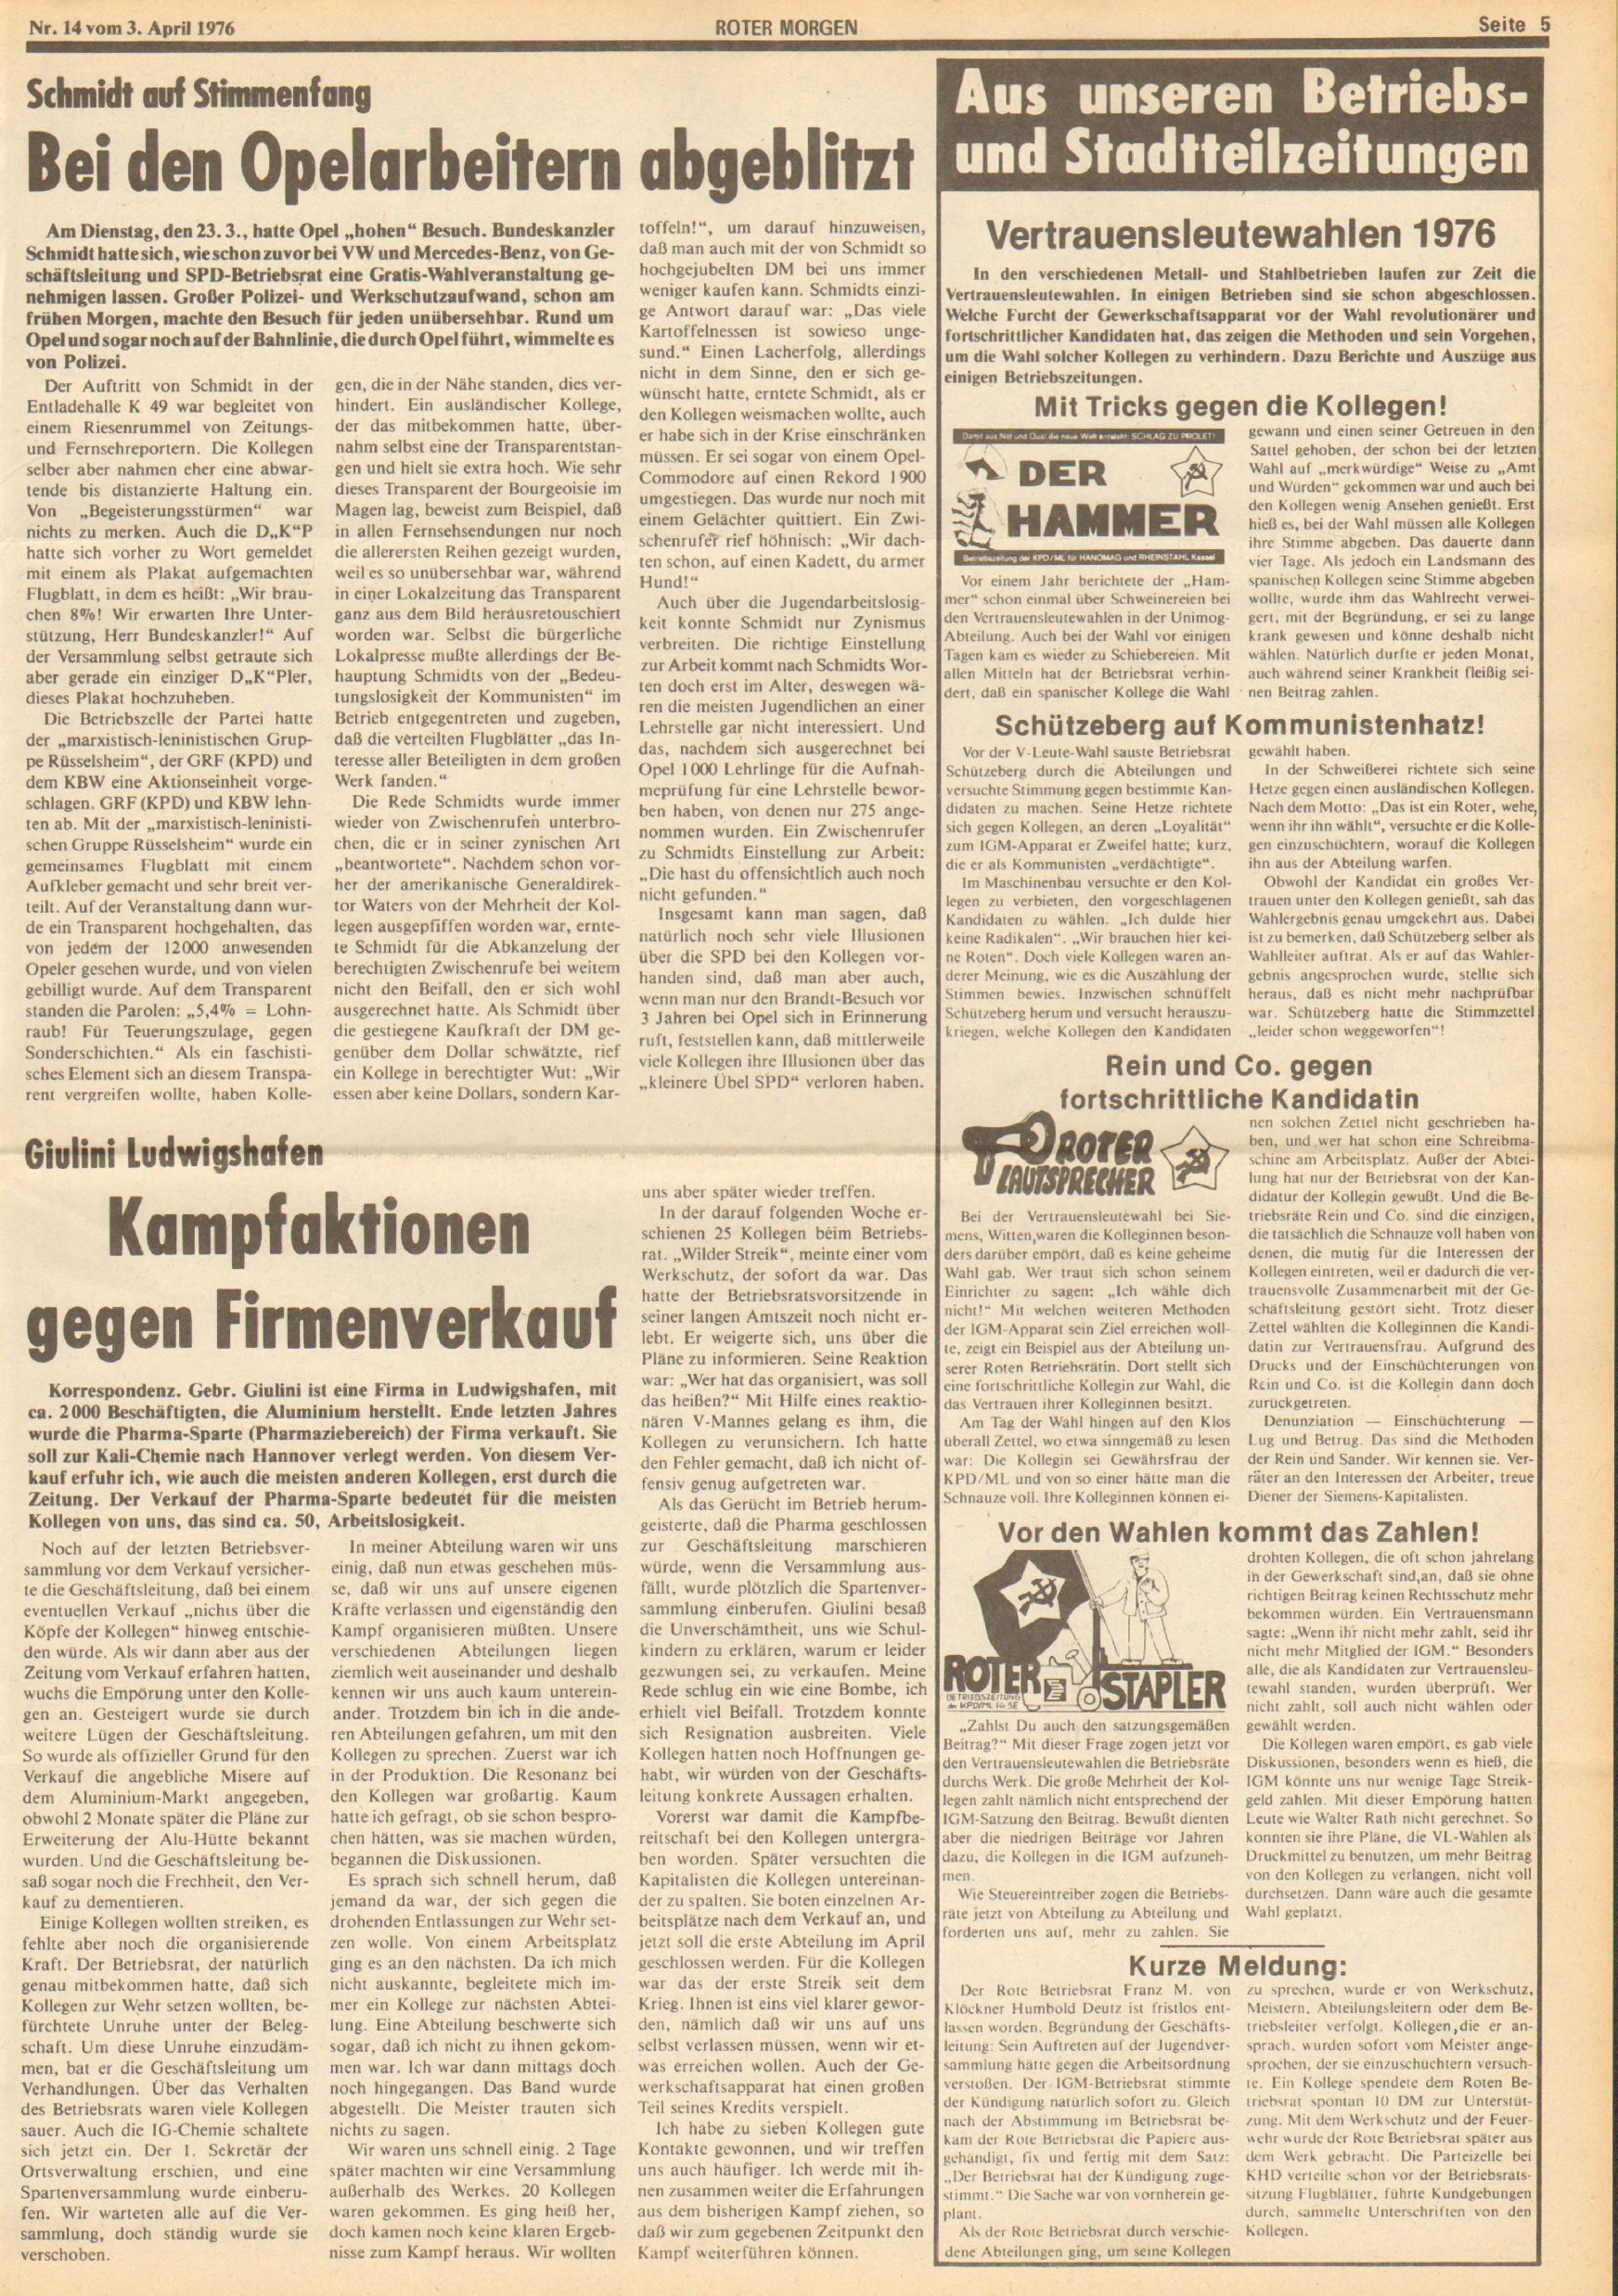 Roter Morgen, 10. Jg., 3. April 1976, Nr. 14, Seite 5